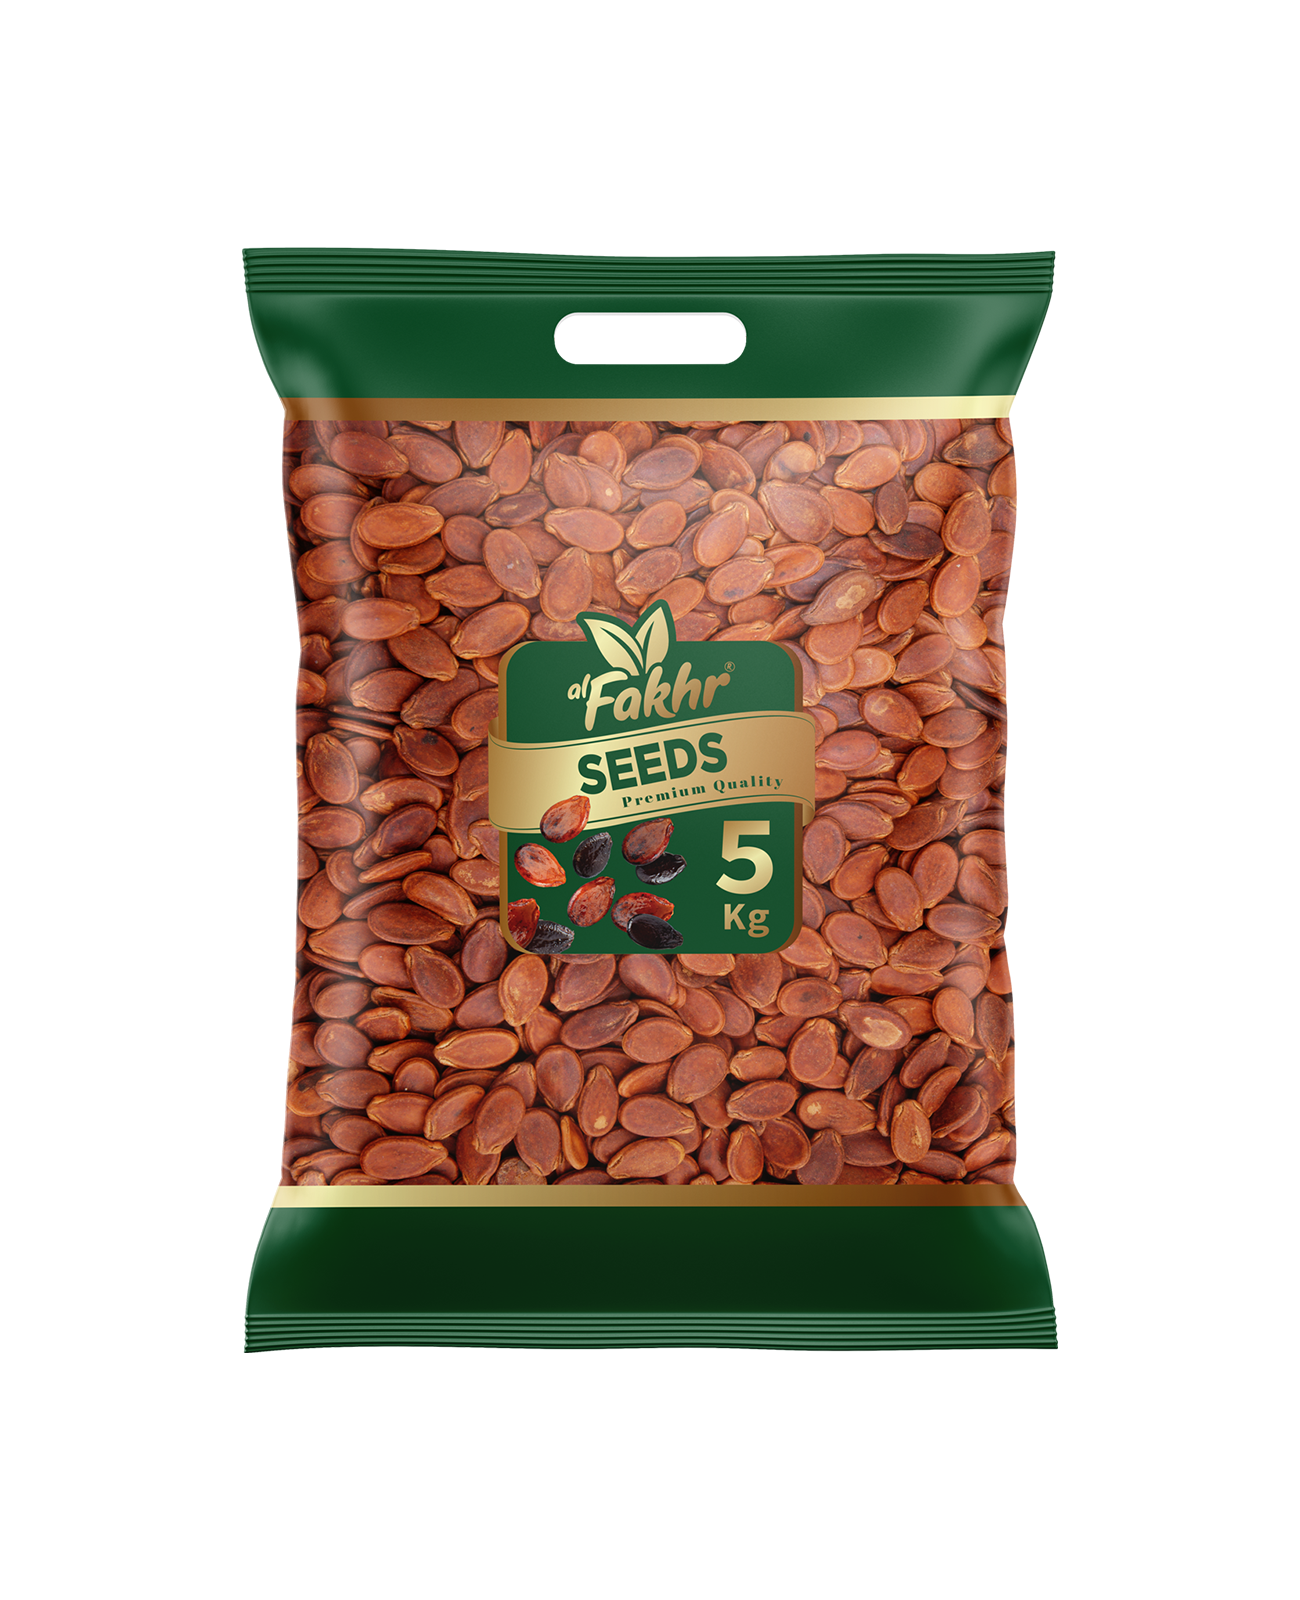 Alfakhr Premium Iranian Seeds